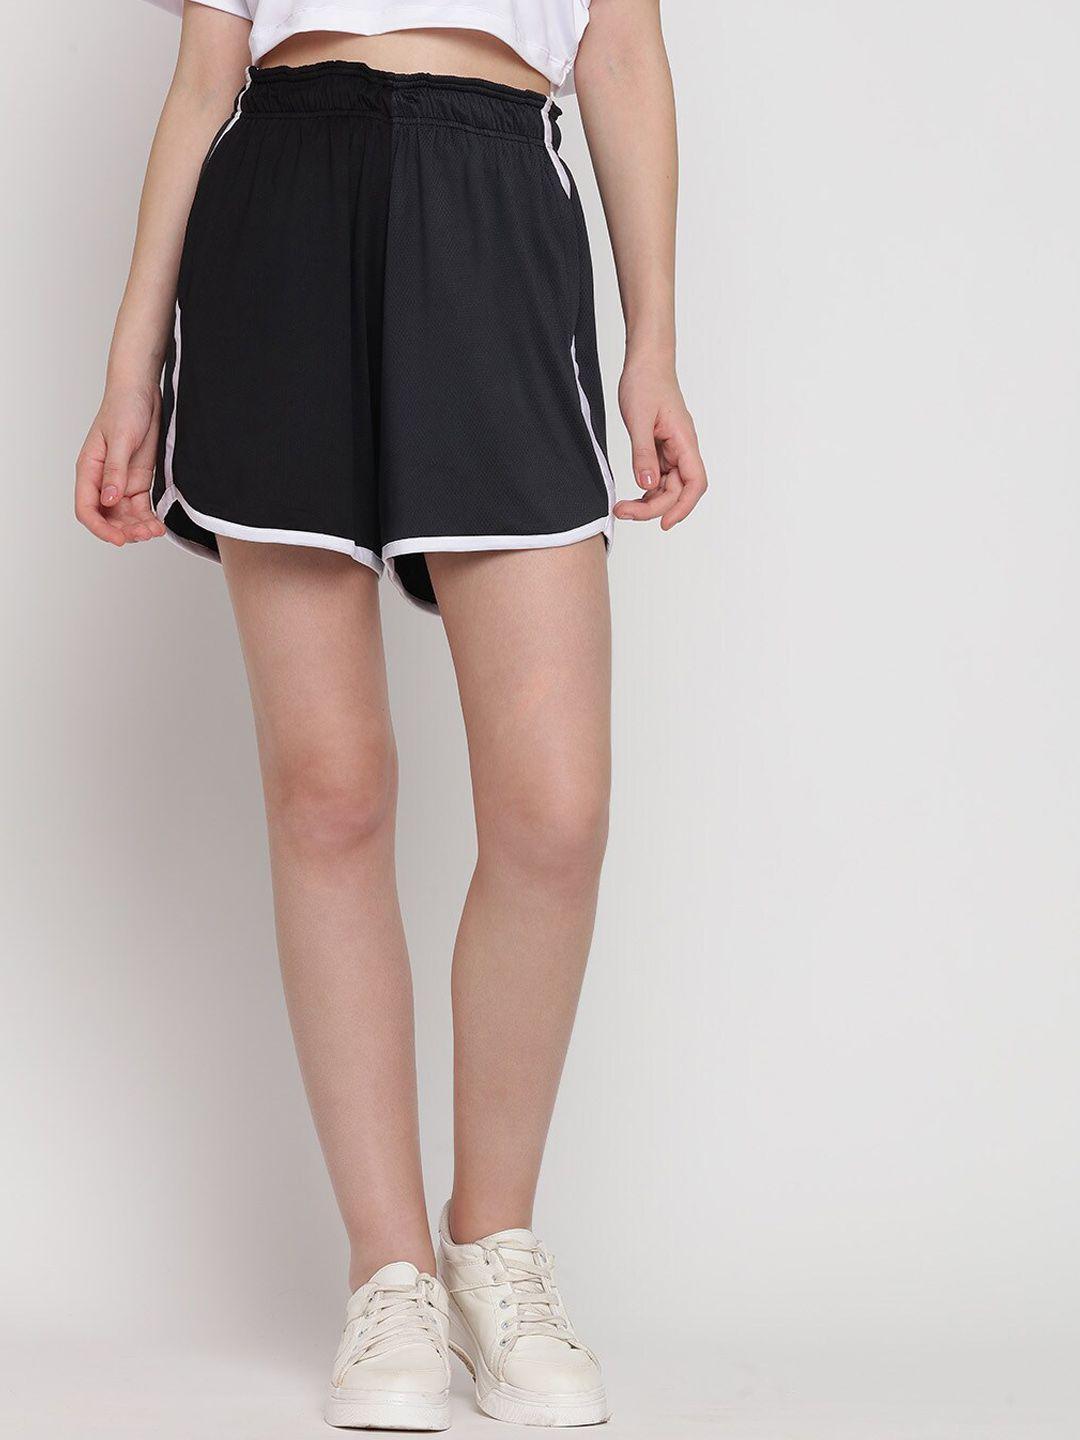 wearjukebox-women-high-rise-regular-shorts